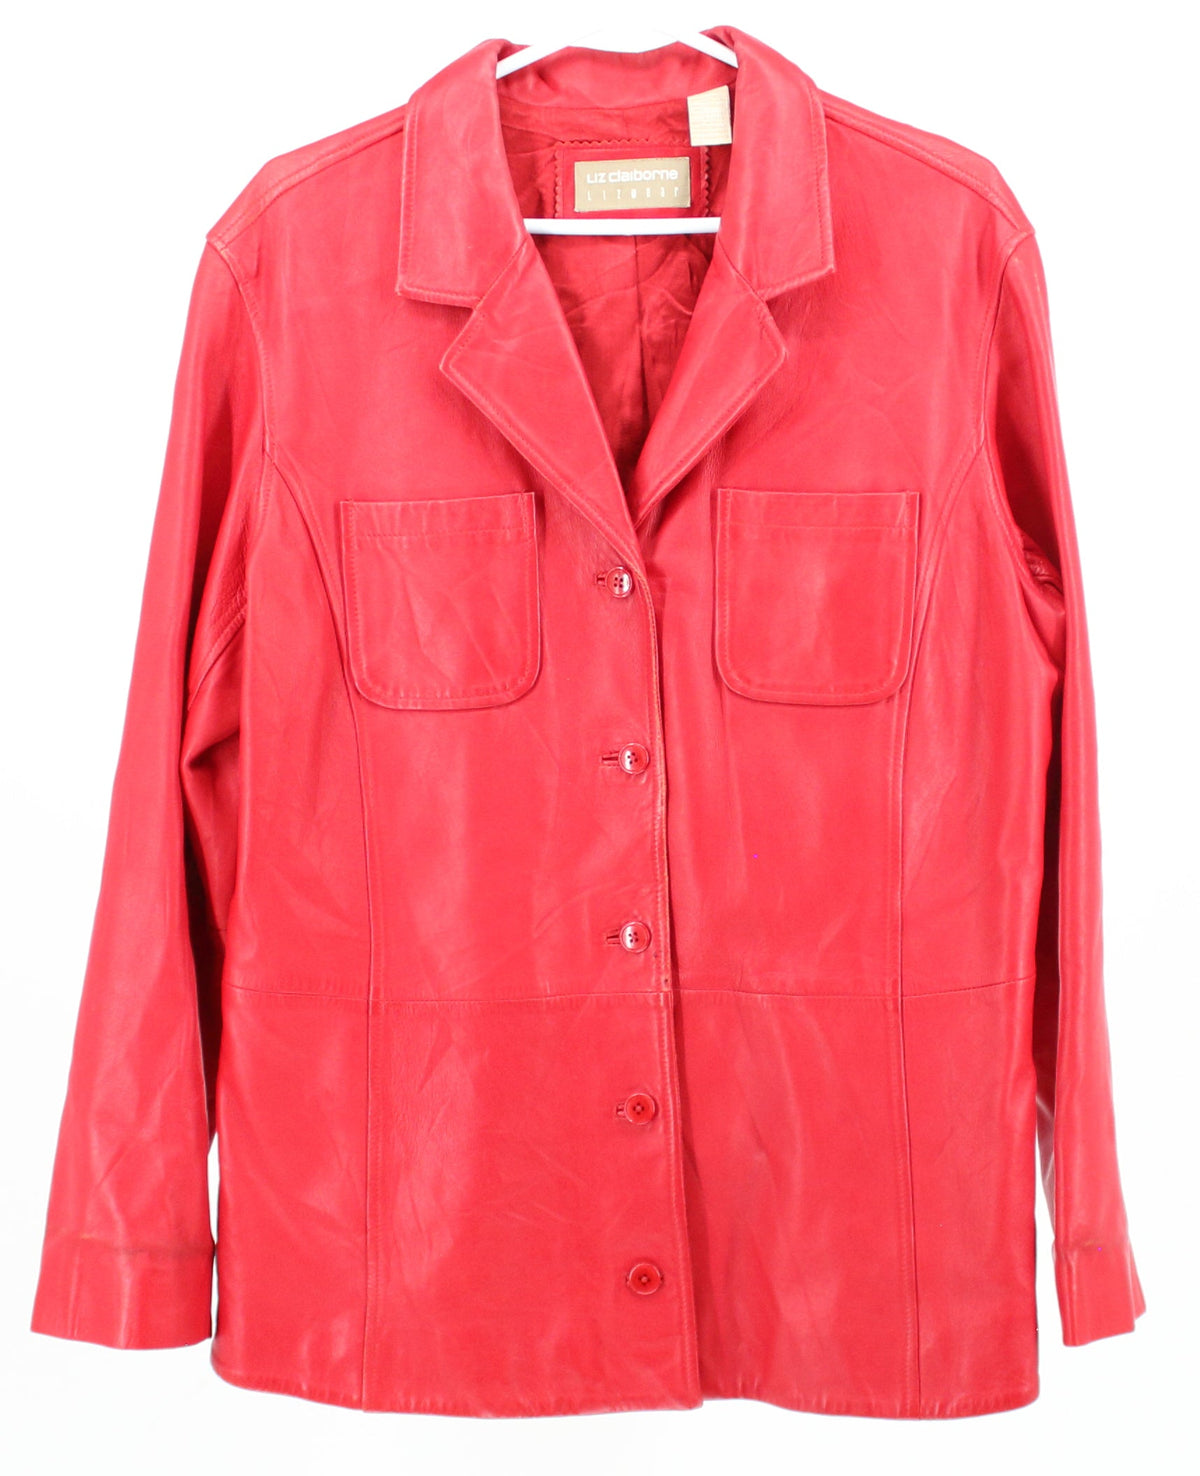 Liz Claiborne Red Soft Leather Jacket